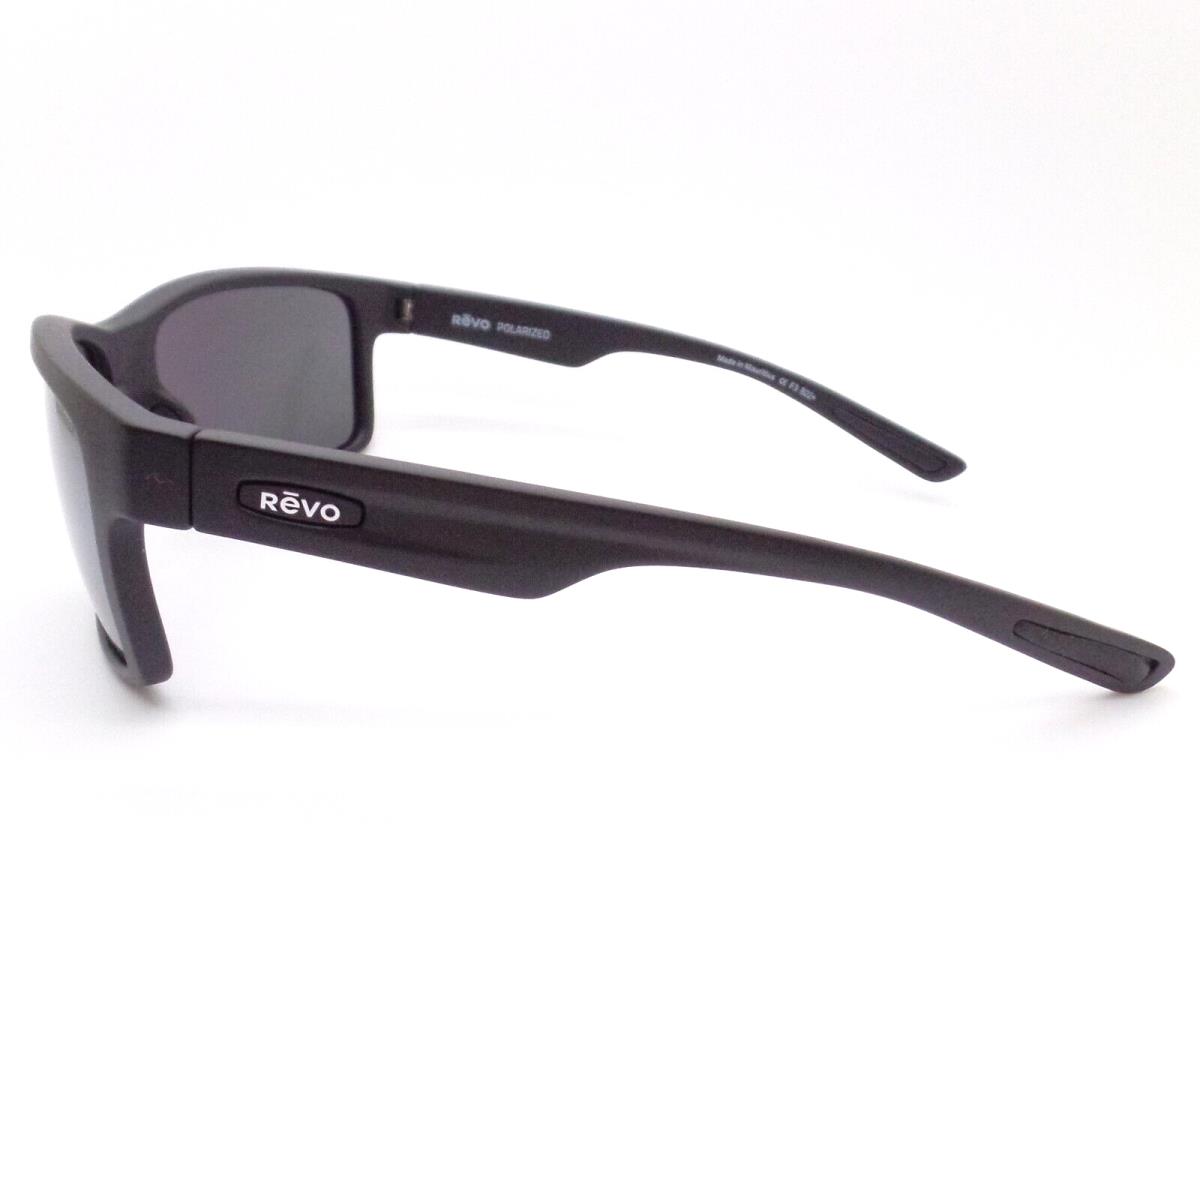 Revo sunglasses Crawler - Matte Black Frame, Graphite Lens 2